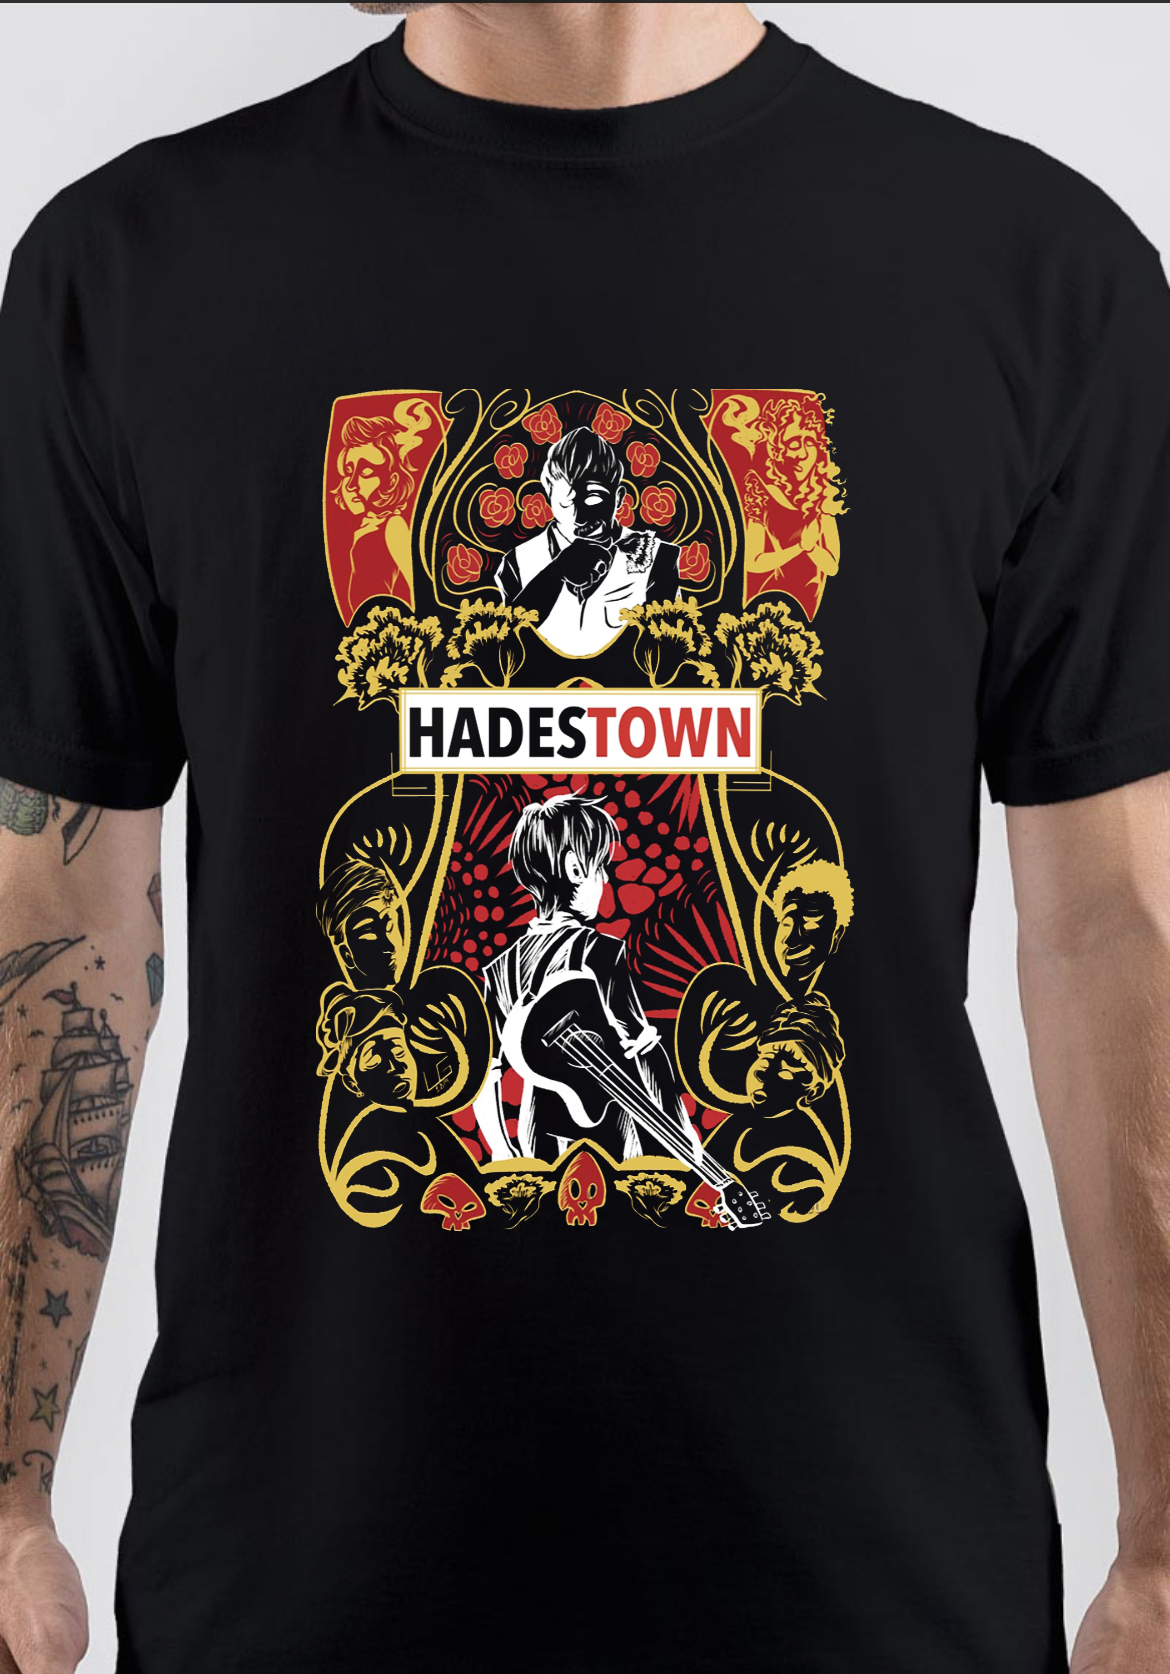 Hadestown T-Shirt And Merchandise